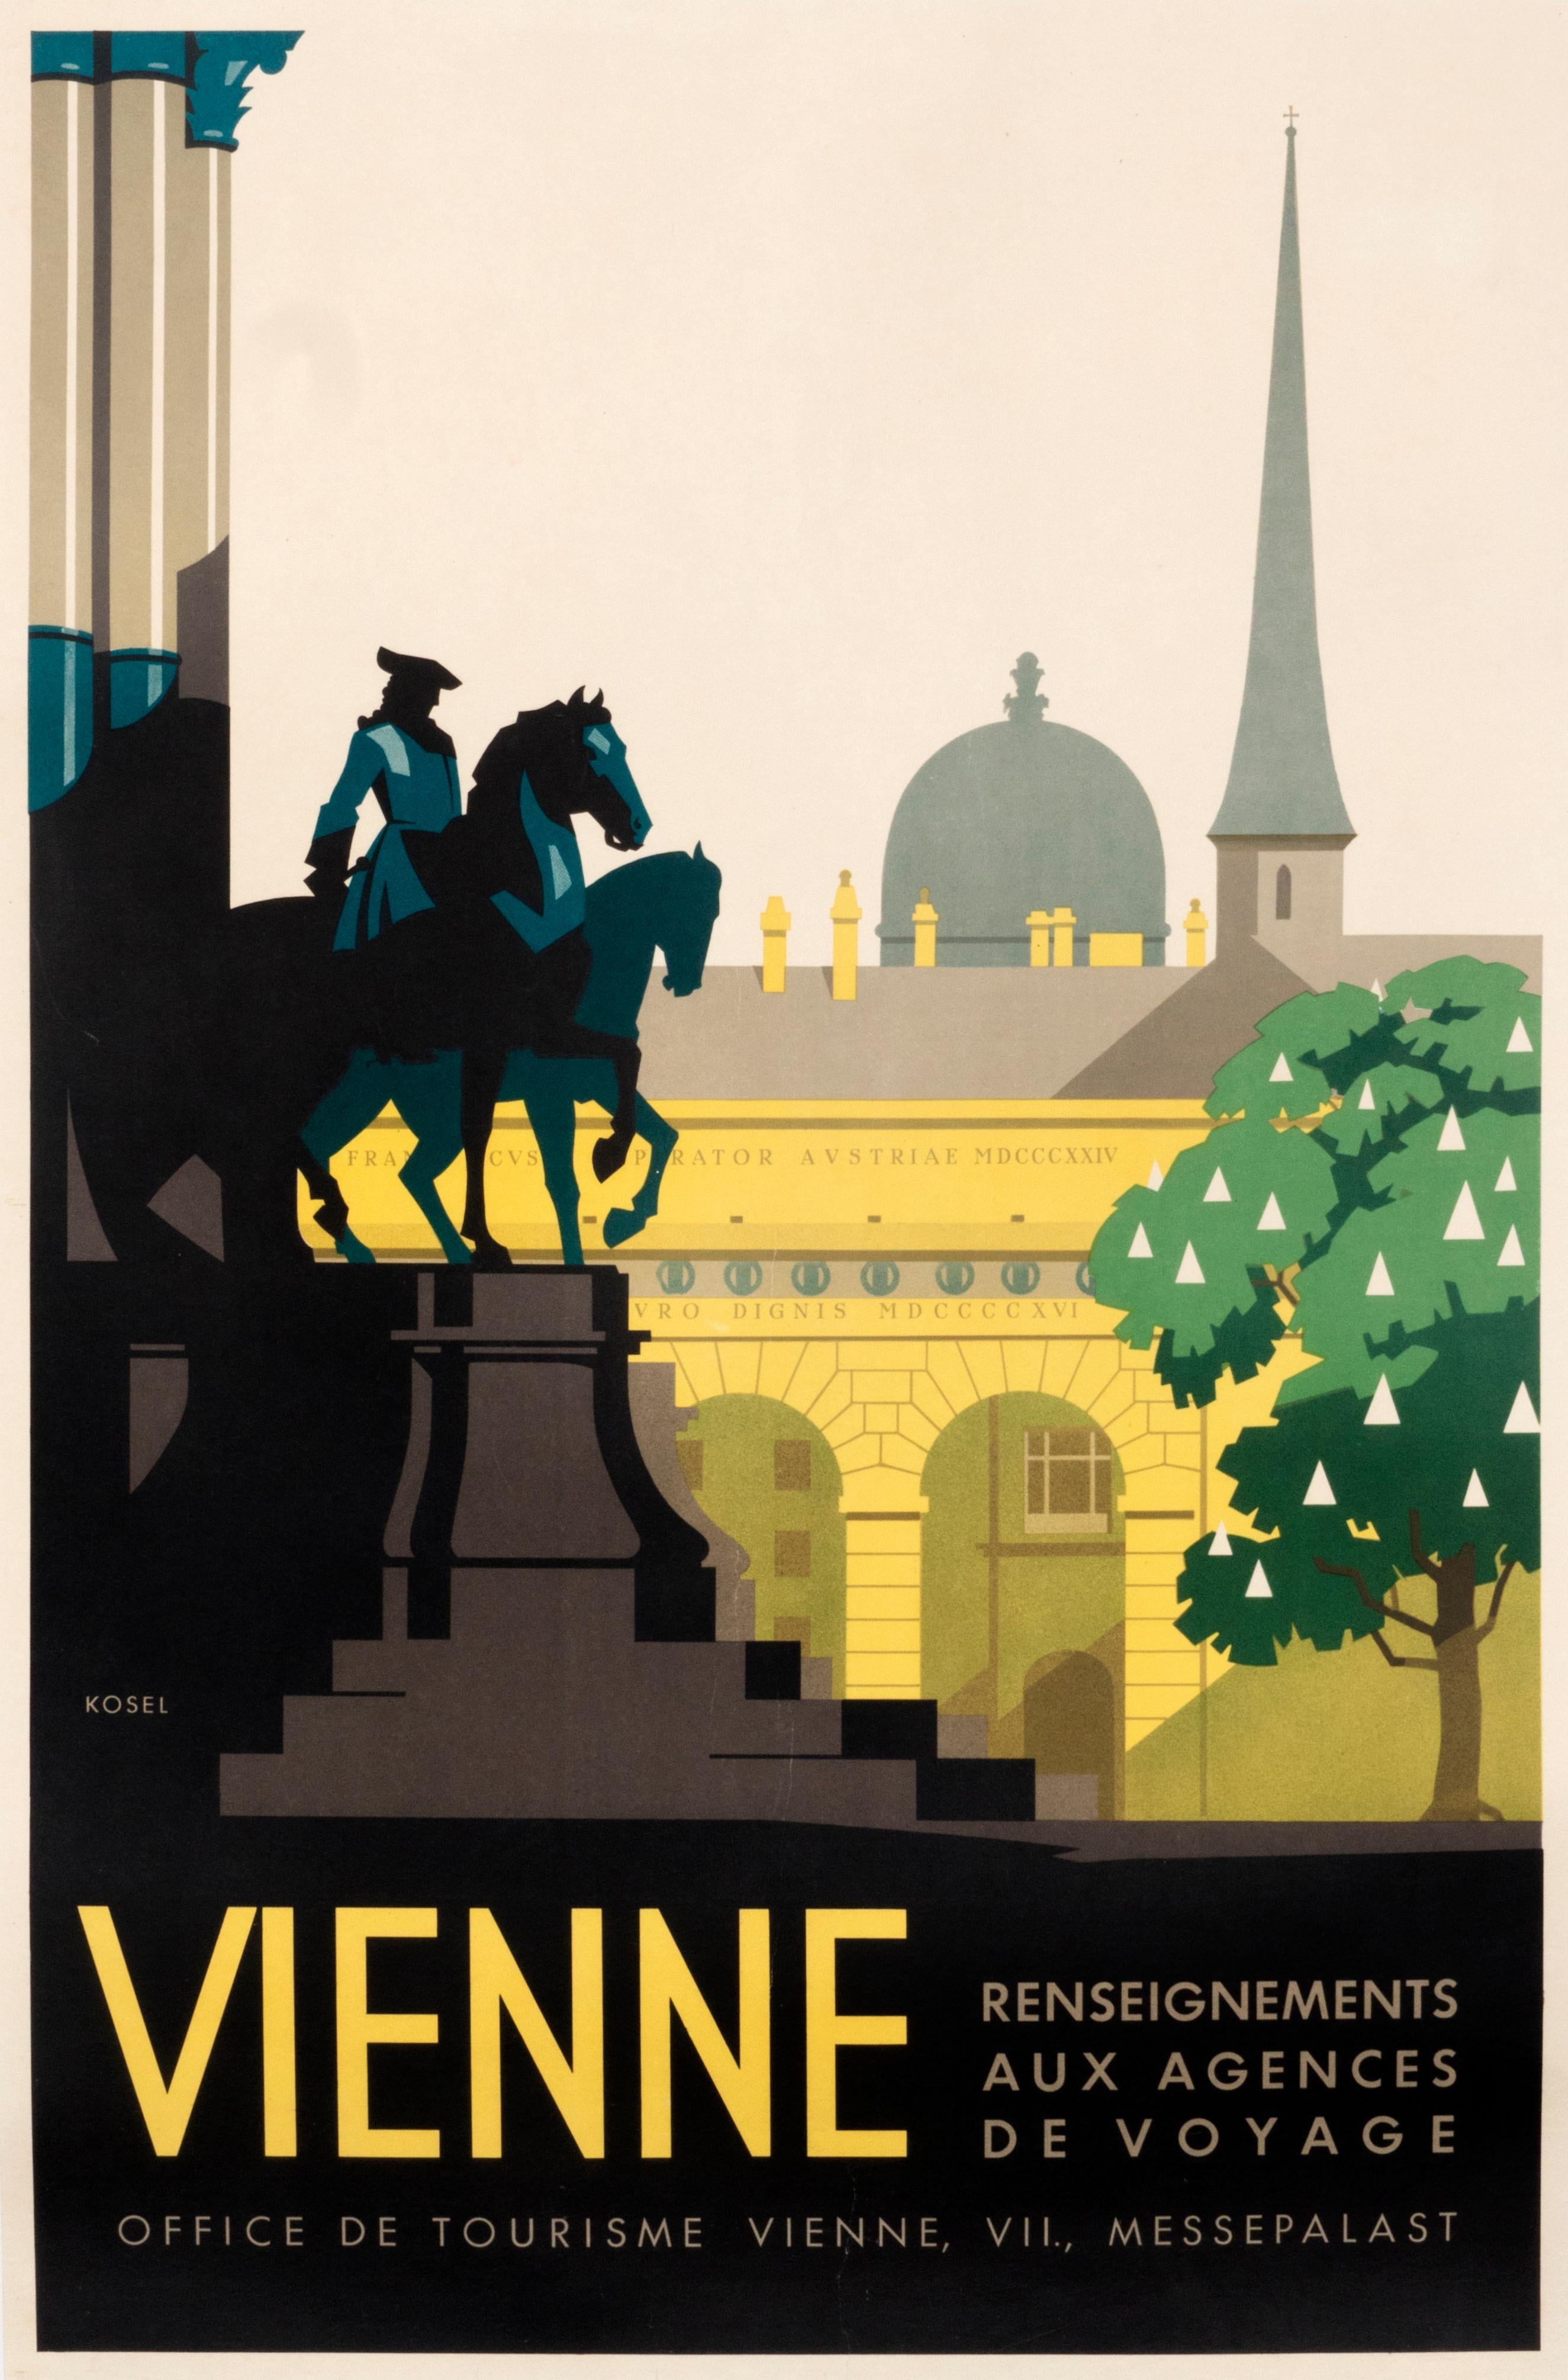 "Vienne" Original Vintage Travel Poster 1930s - Print by Hermann Kosel